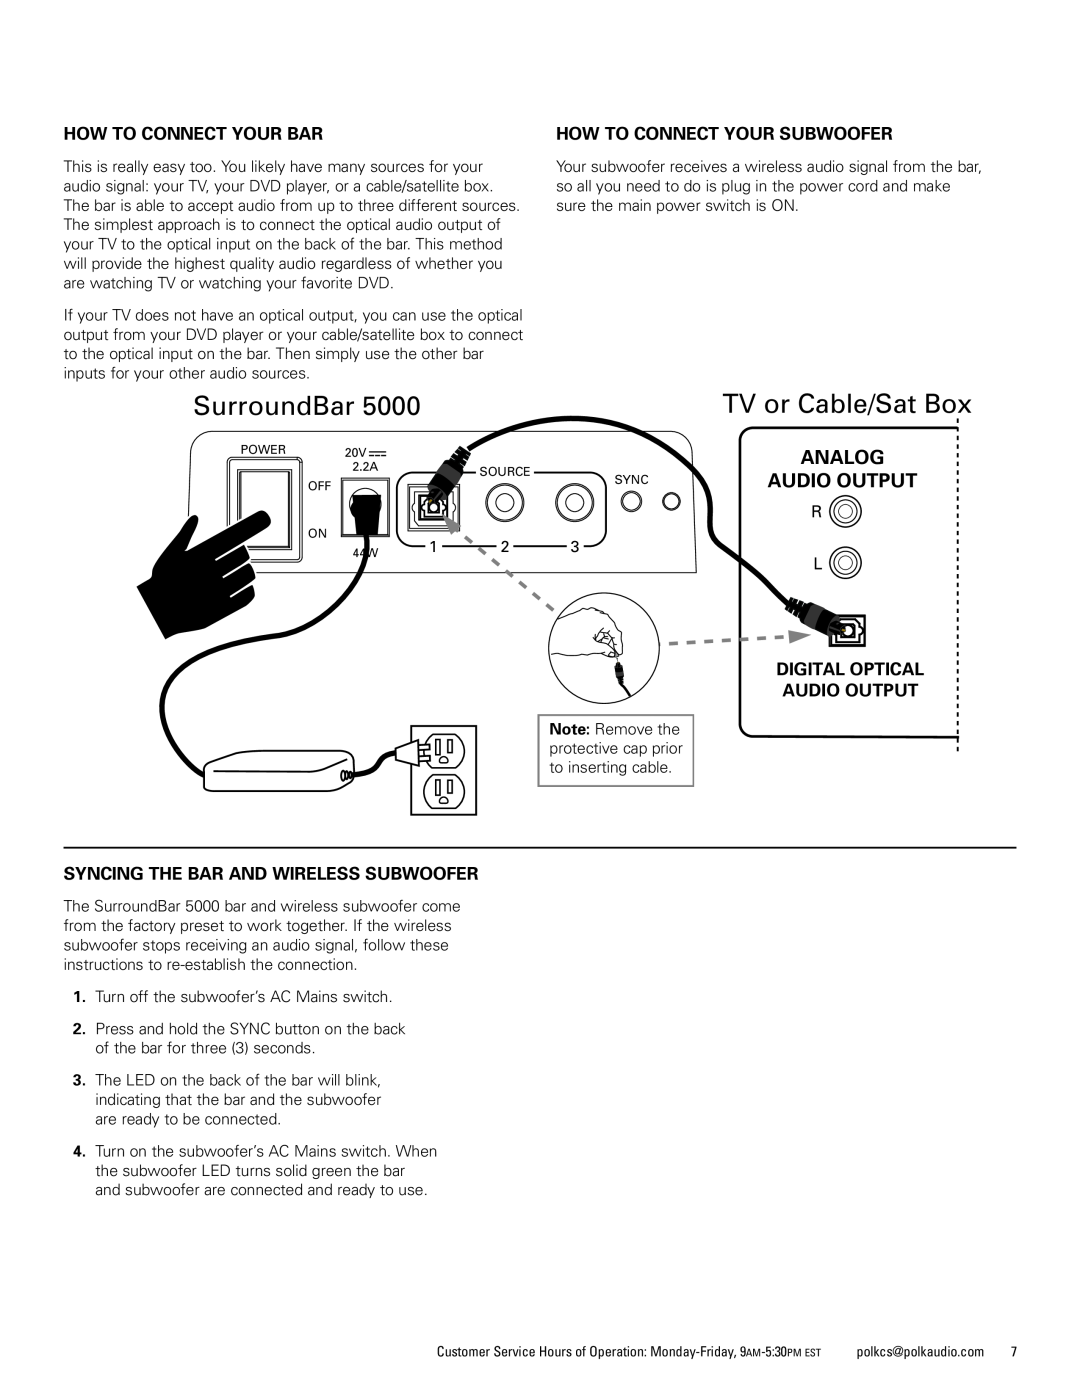 Polk Audio 5000 manual SurroundBar, TV or Cable/Sat Box, Analog Audio Output, How To Connect Your Bar 